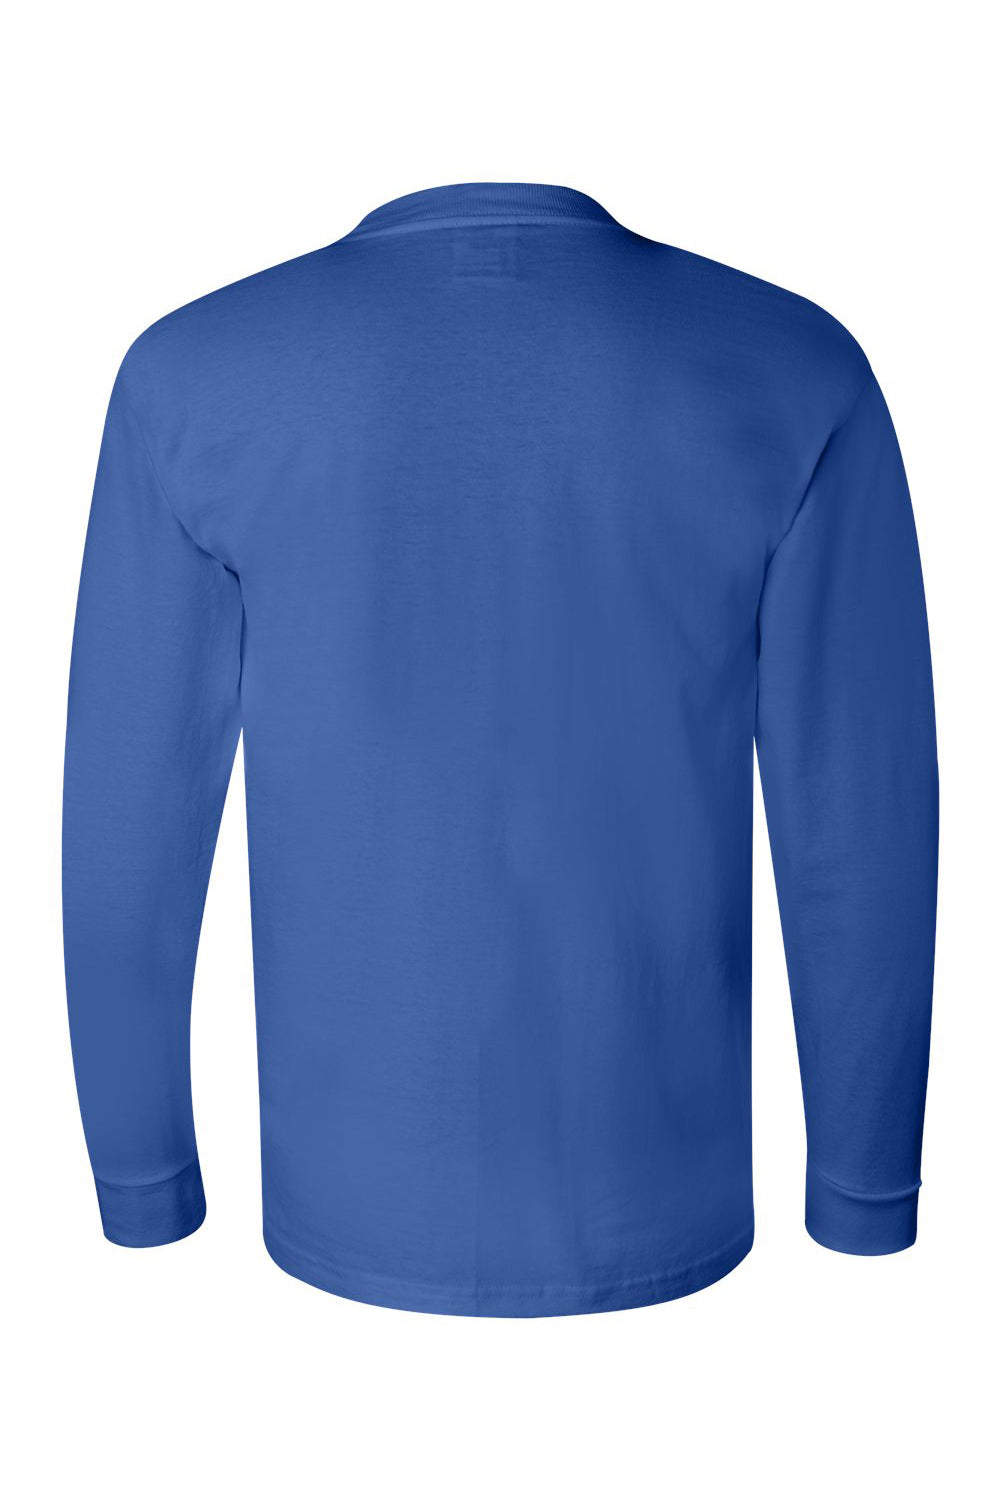 Bayside BA6100 Mens USA Made Long Sleeve Crewneck T-Shirt Royal Blue Flat Back